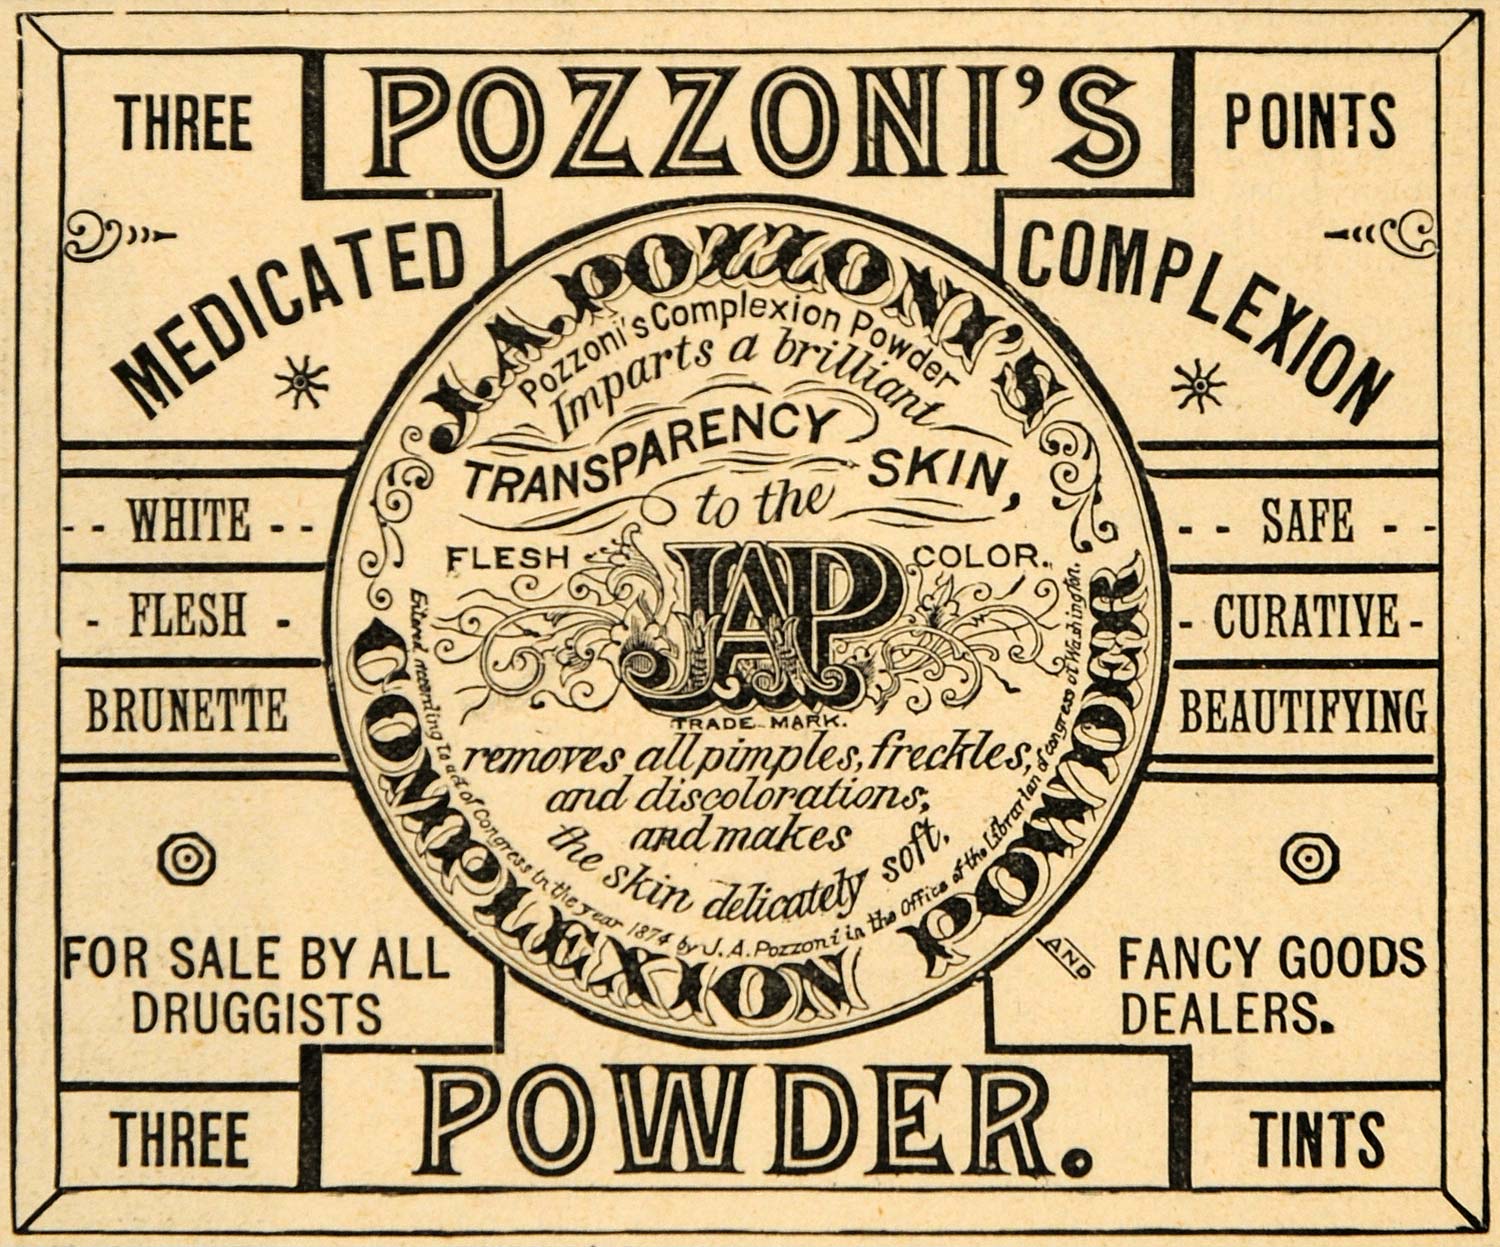 1892 Ad J A Pozzoni Complexion Powder Cosmetics - ORIGINAL ADVERTISING LHJ4